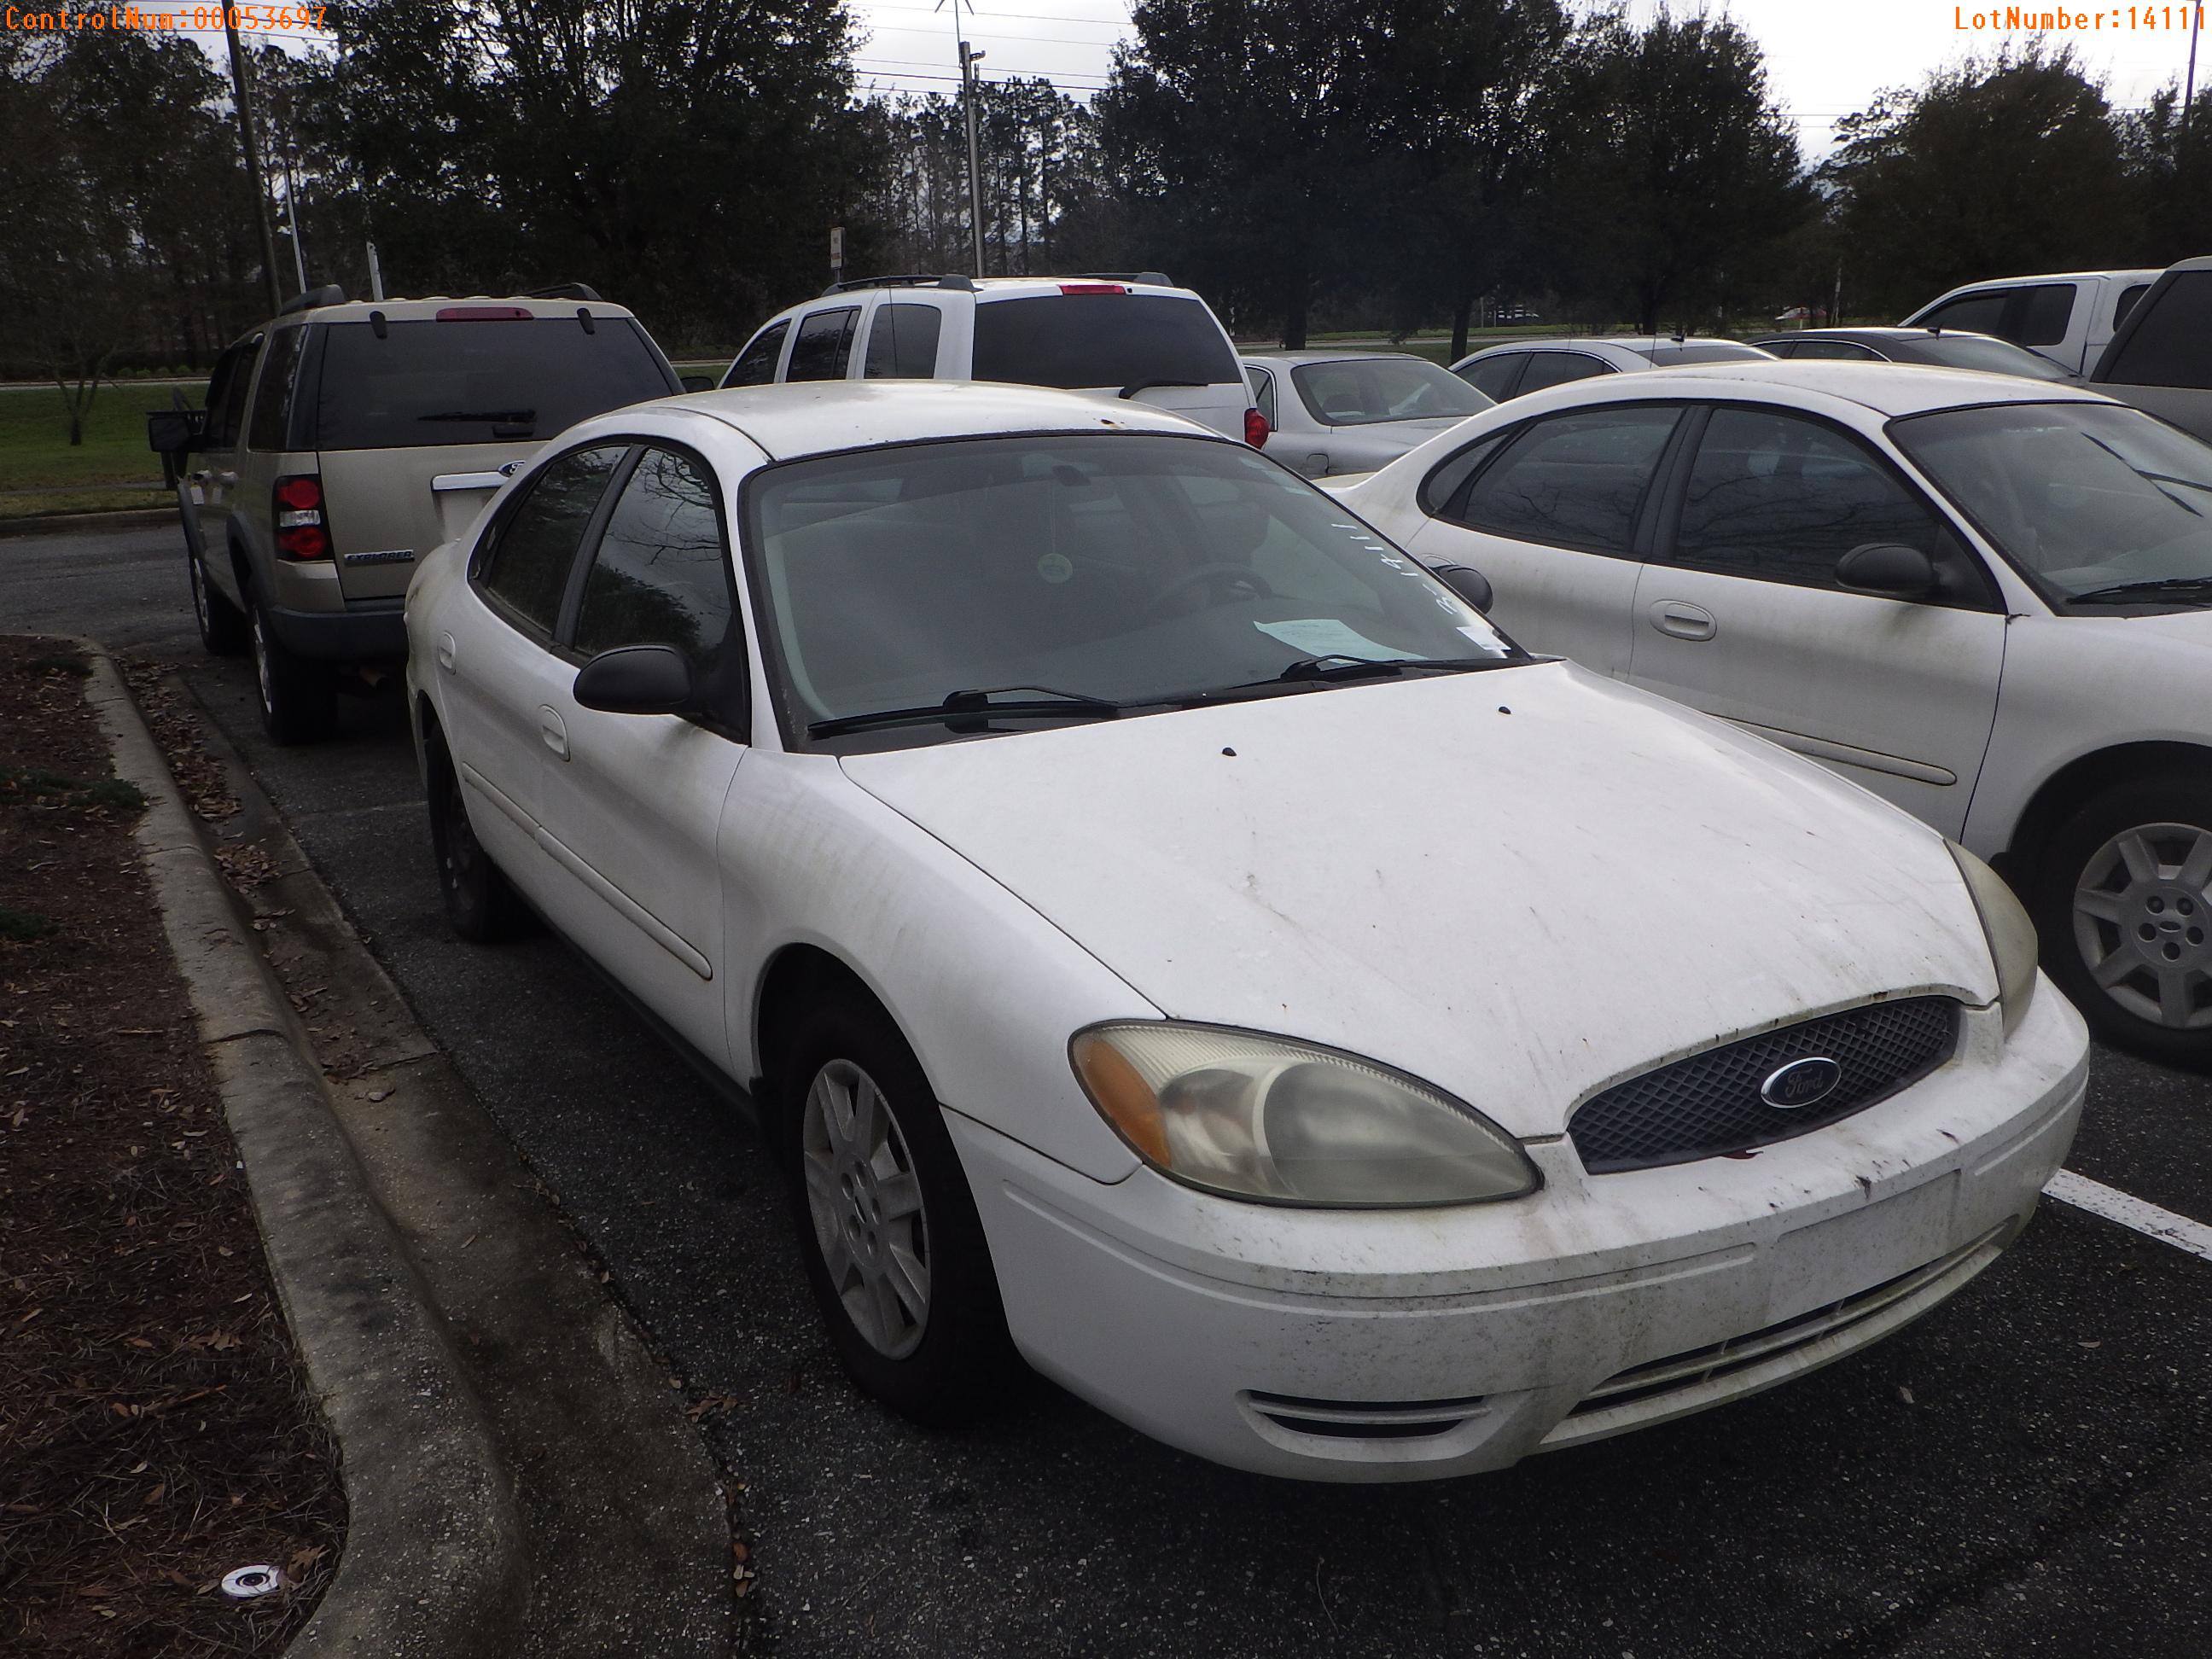 3-14111 (Cars-Sedan 4D)  Seller: Florida State D.O.H. 2006 FORD TAURUS